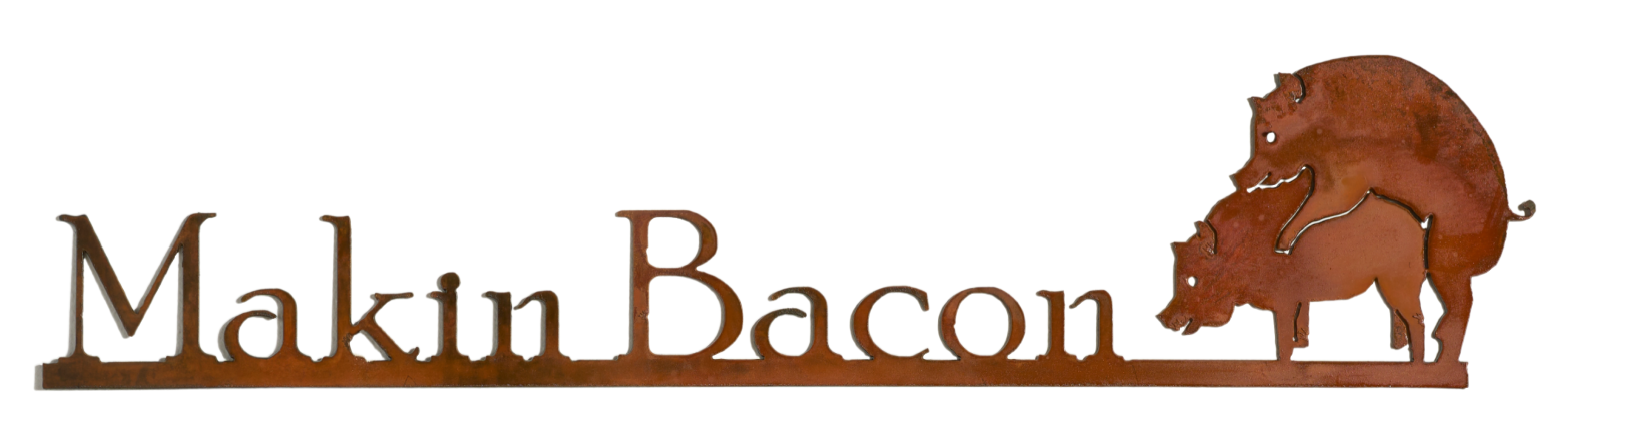 "Making Bacon" metal sign by elizabeth keith designs